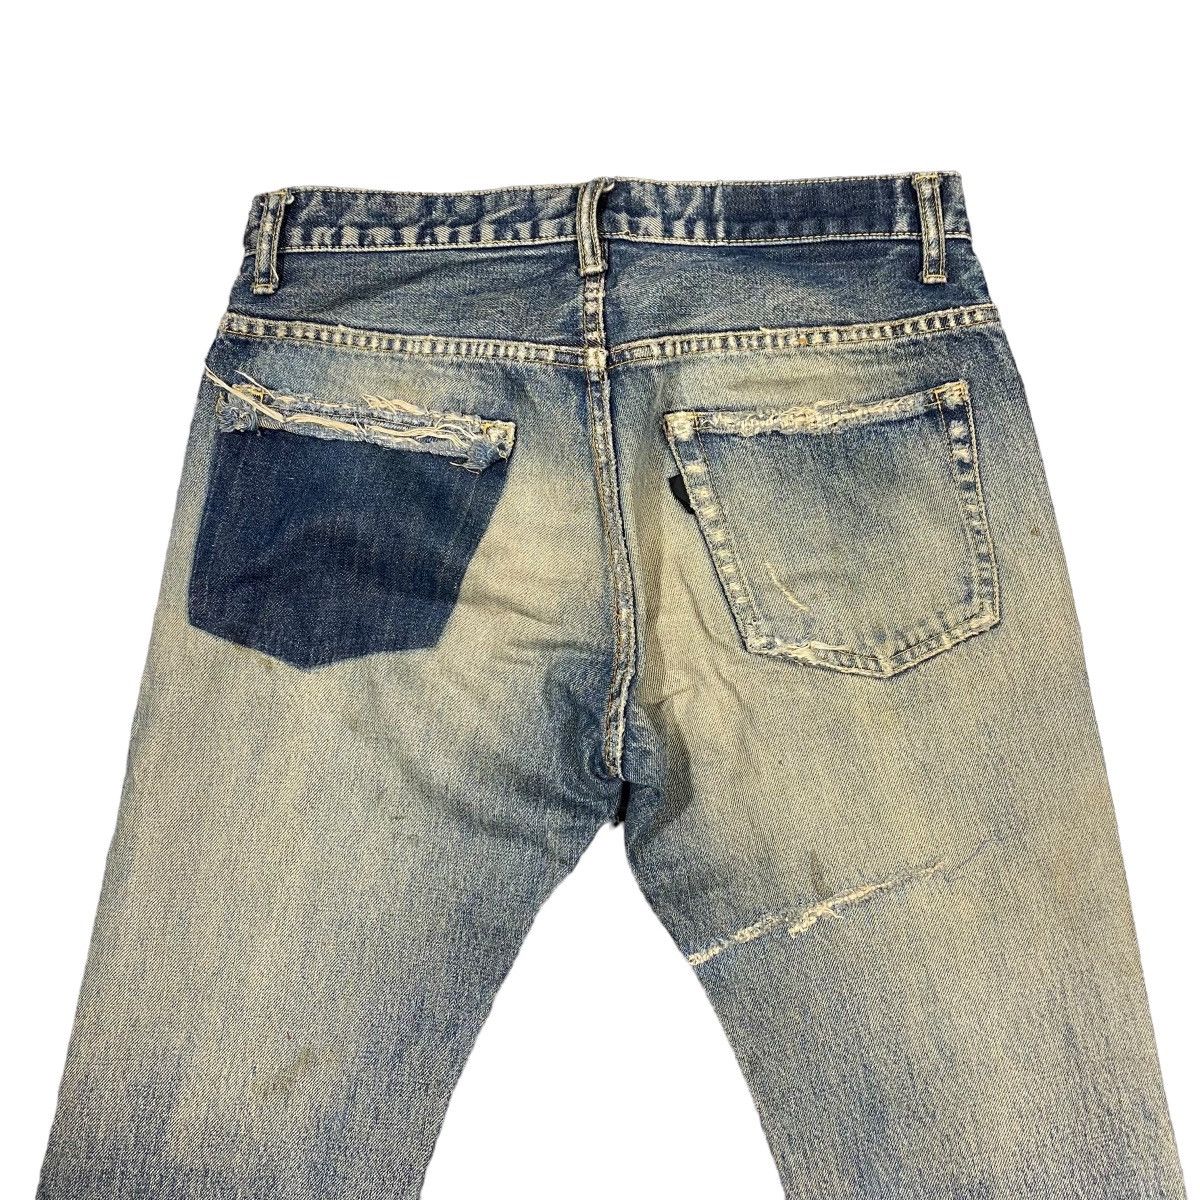 ❗️❗️❗️Rare Item Undercover 68 Blue Yarn Jeans - 17